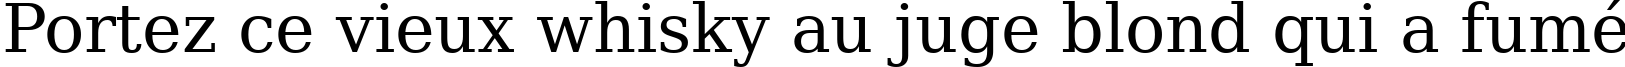 Пример написания шрифтом ae_AlBattar текста на французском